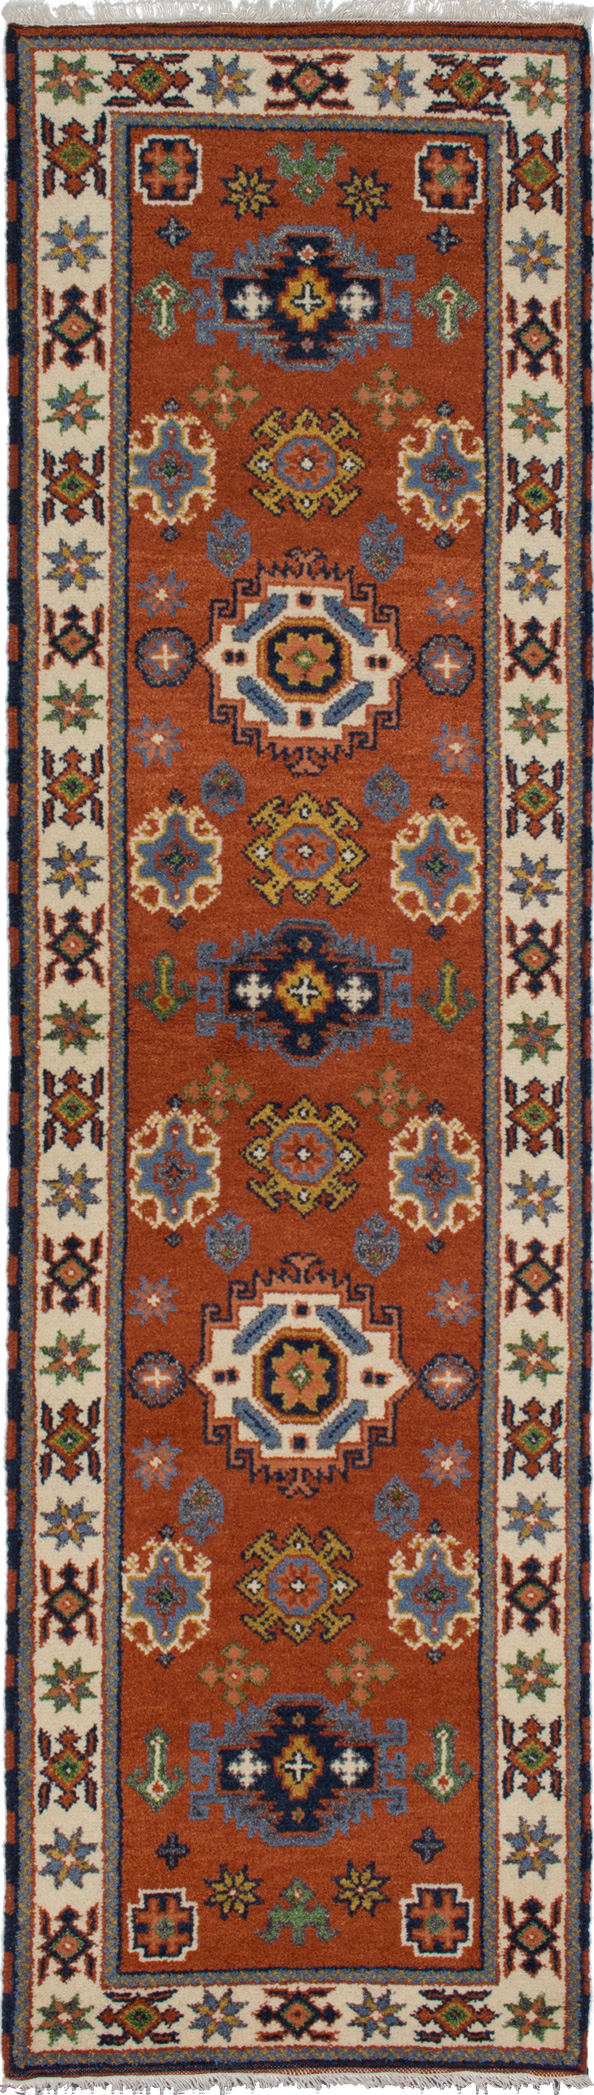 Hand-knotted Royal Kazak Dark Copper Wool Rug 2'9" x 9'10"  Size: 2'9" x 9'10"  